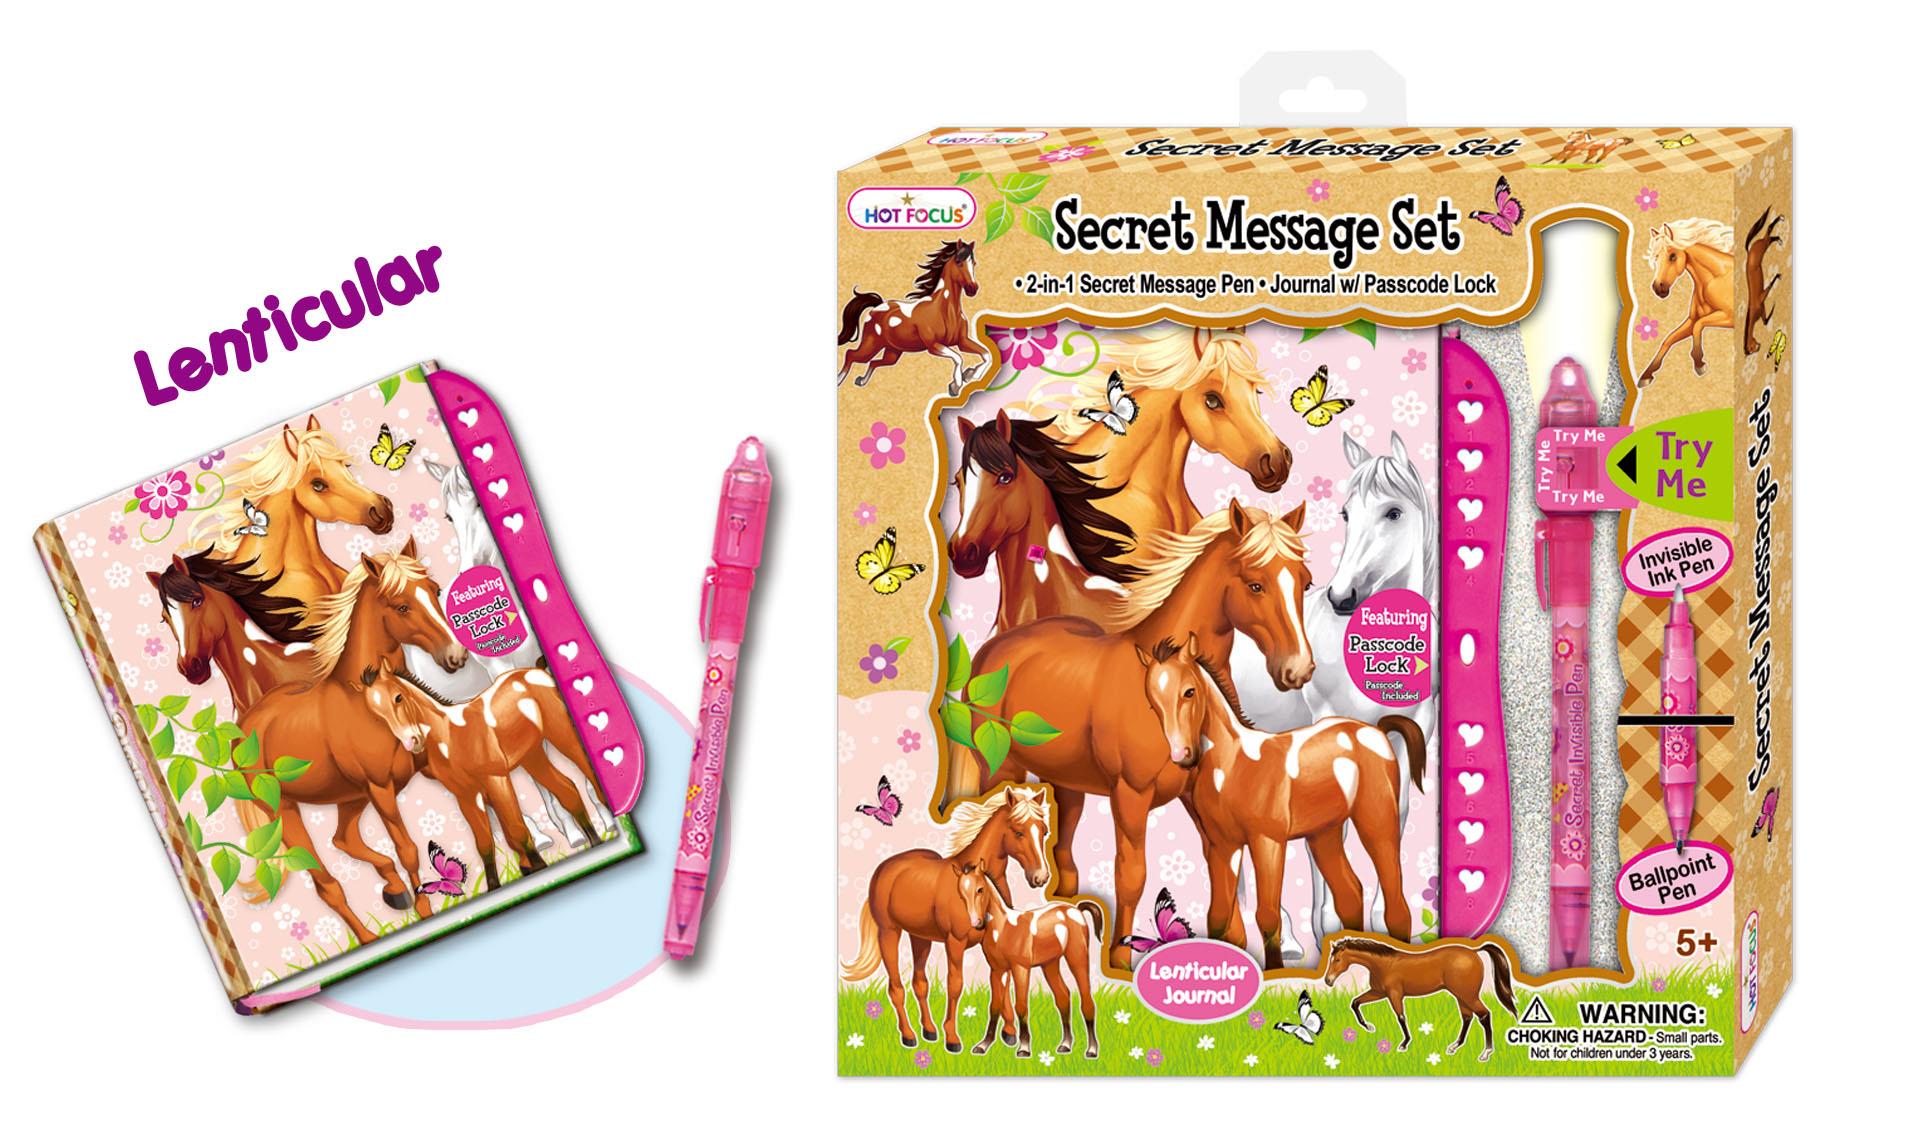 SECRET MESSAGE SET ENCHANTED HORSE